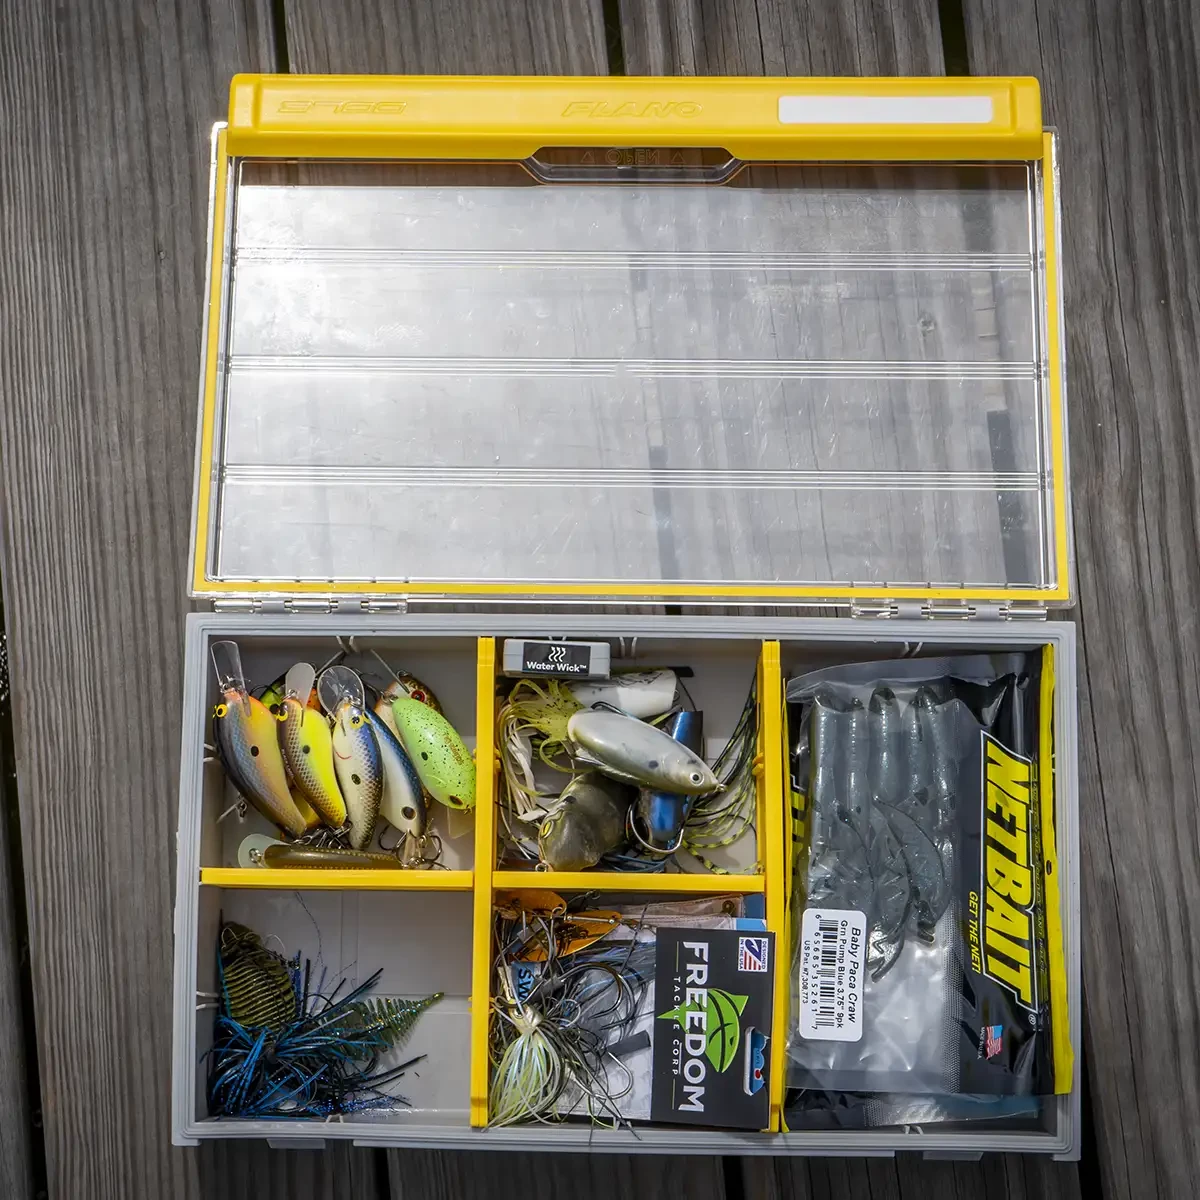 Fishing Tool Box - Why You NEED One 